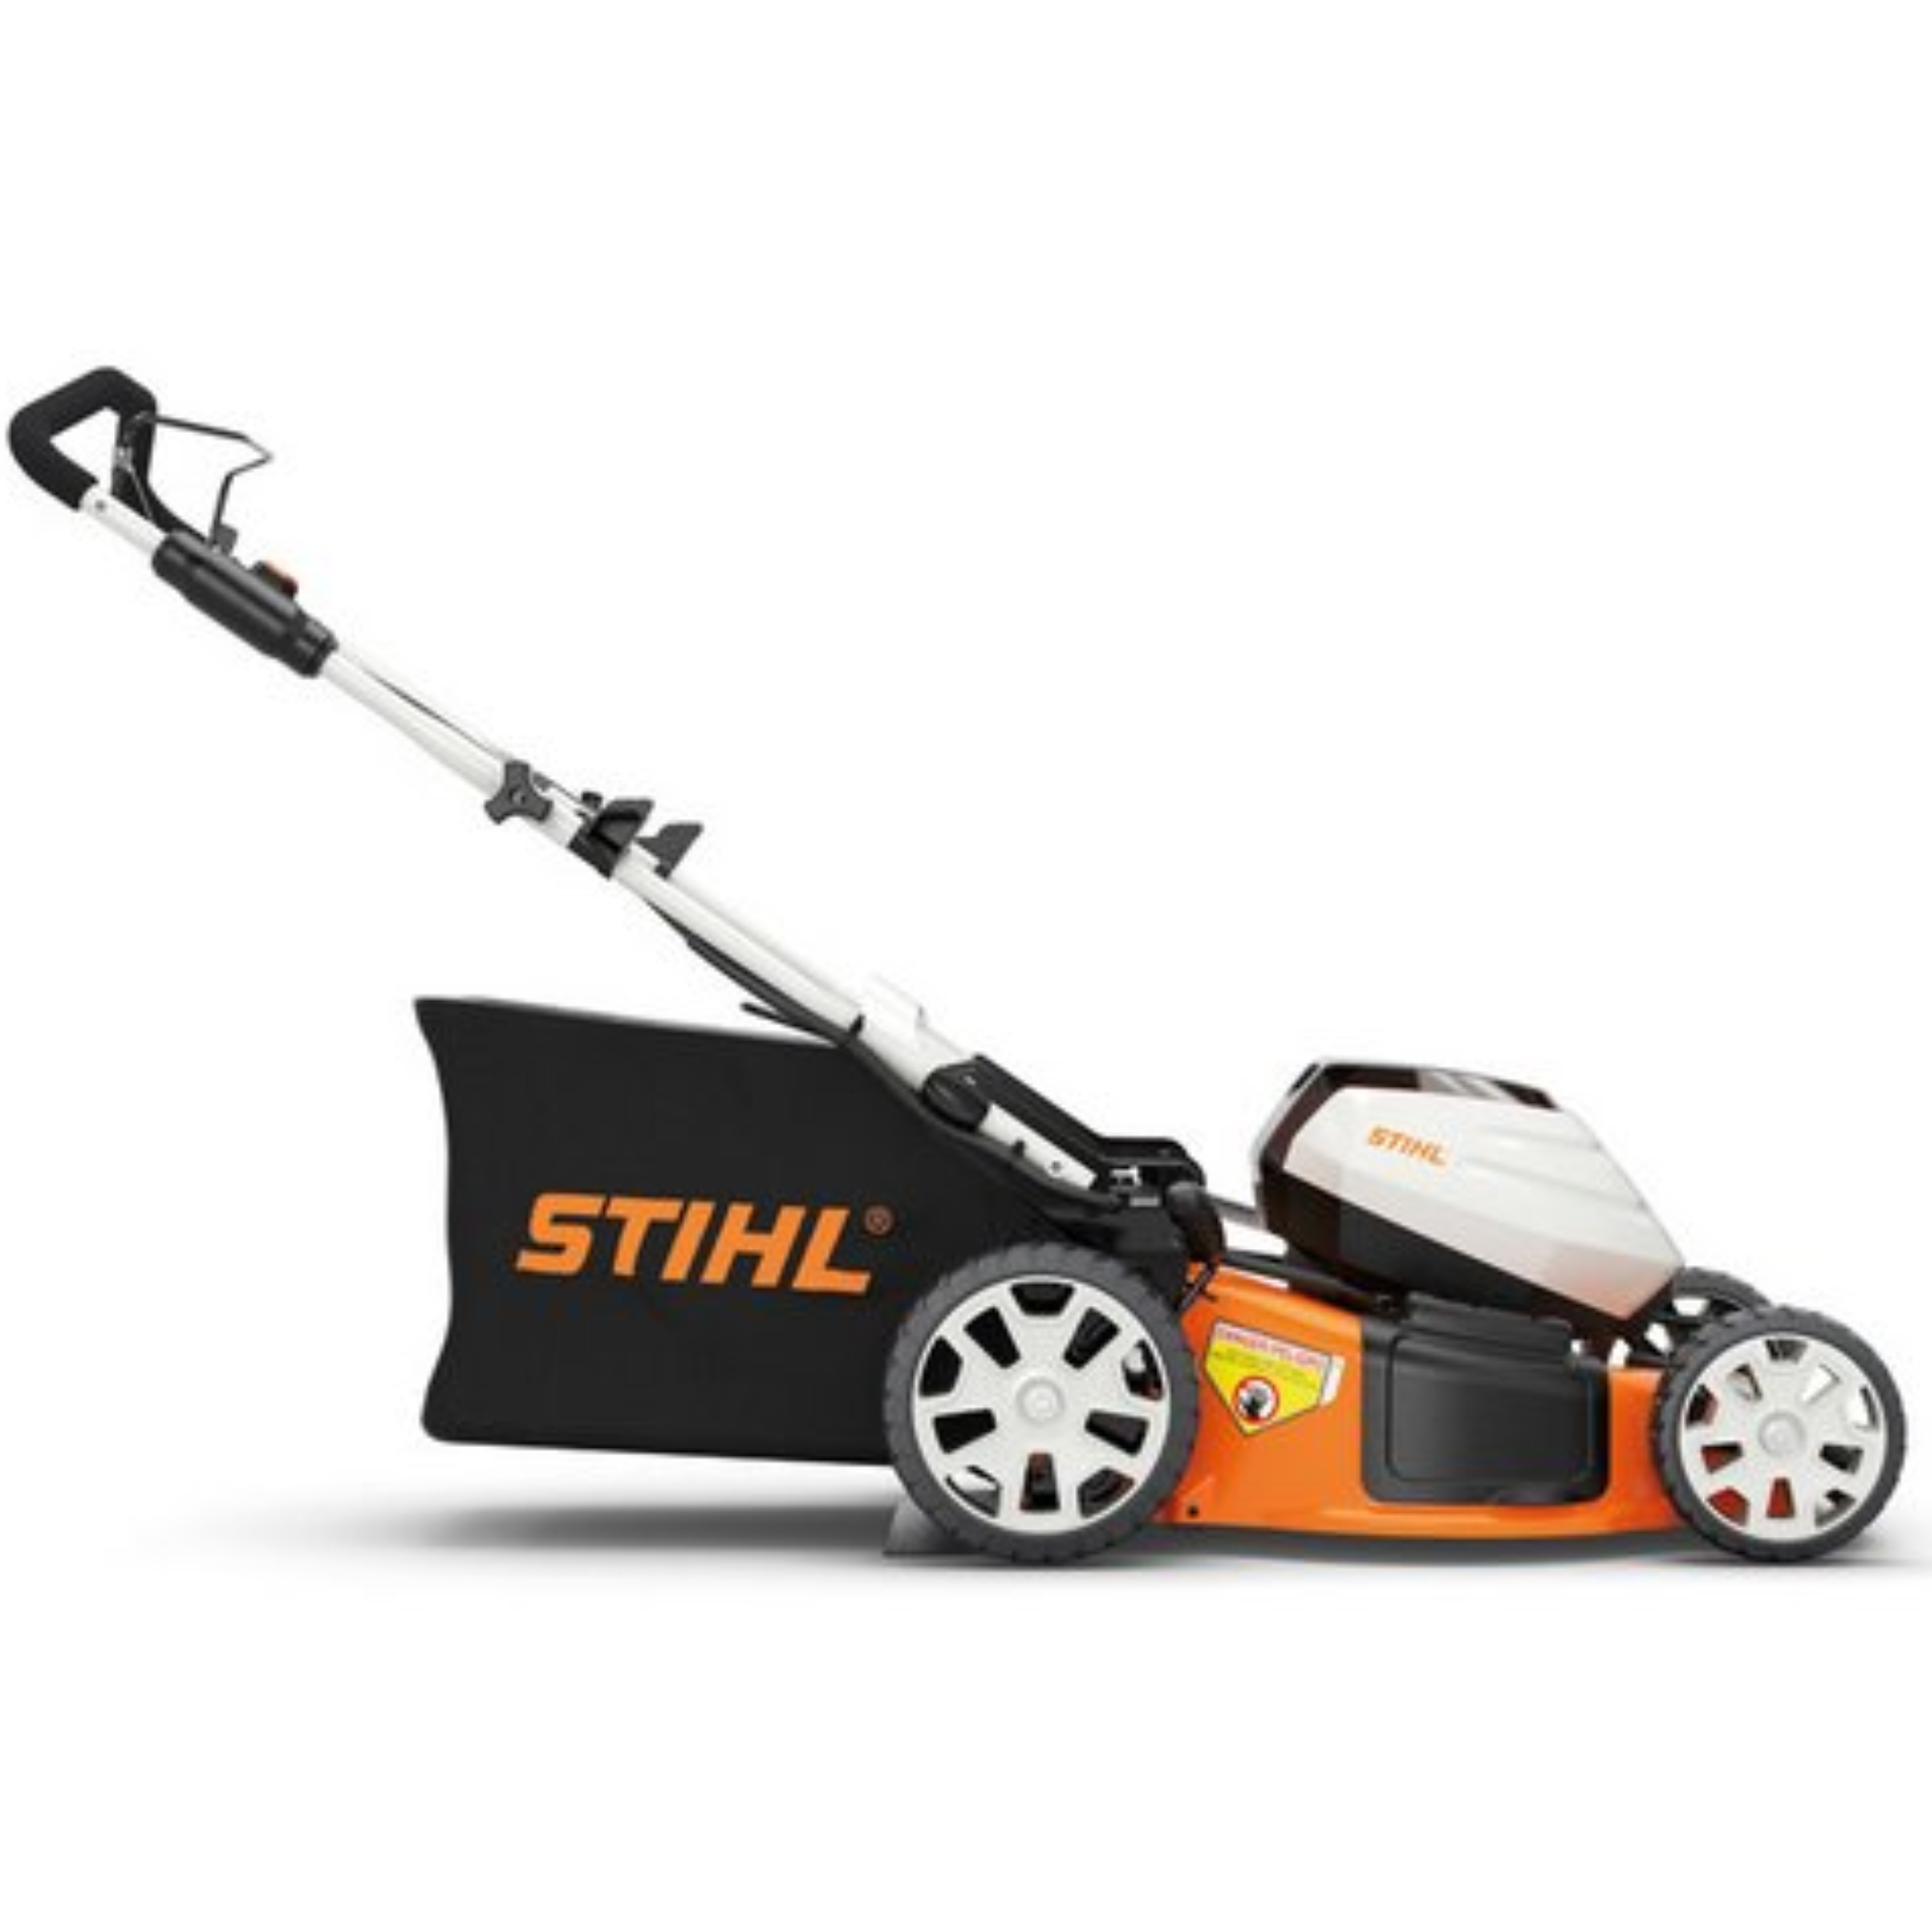 Stihl RMA 460 Battery Powered Cordless Electric Lawn Mower